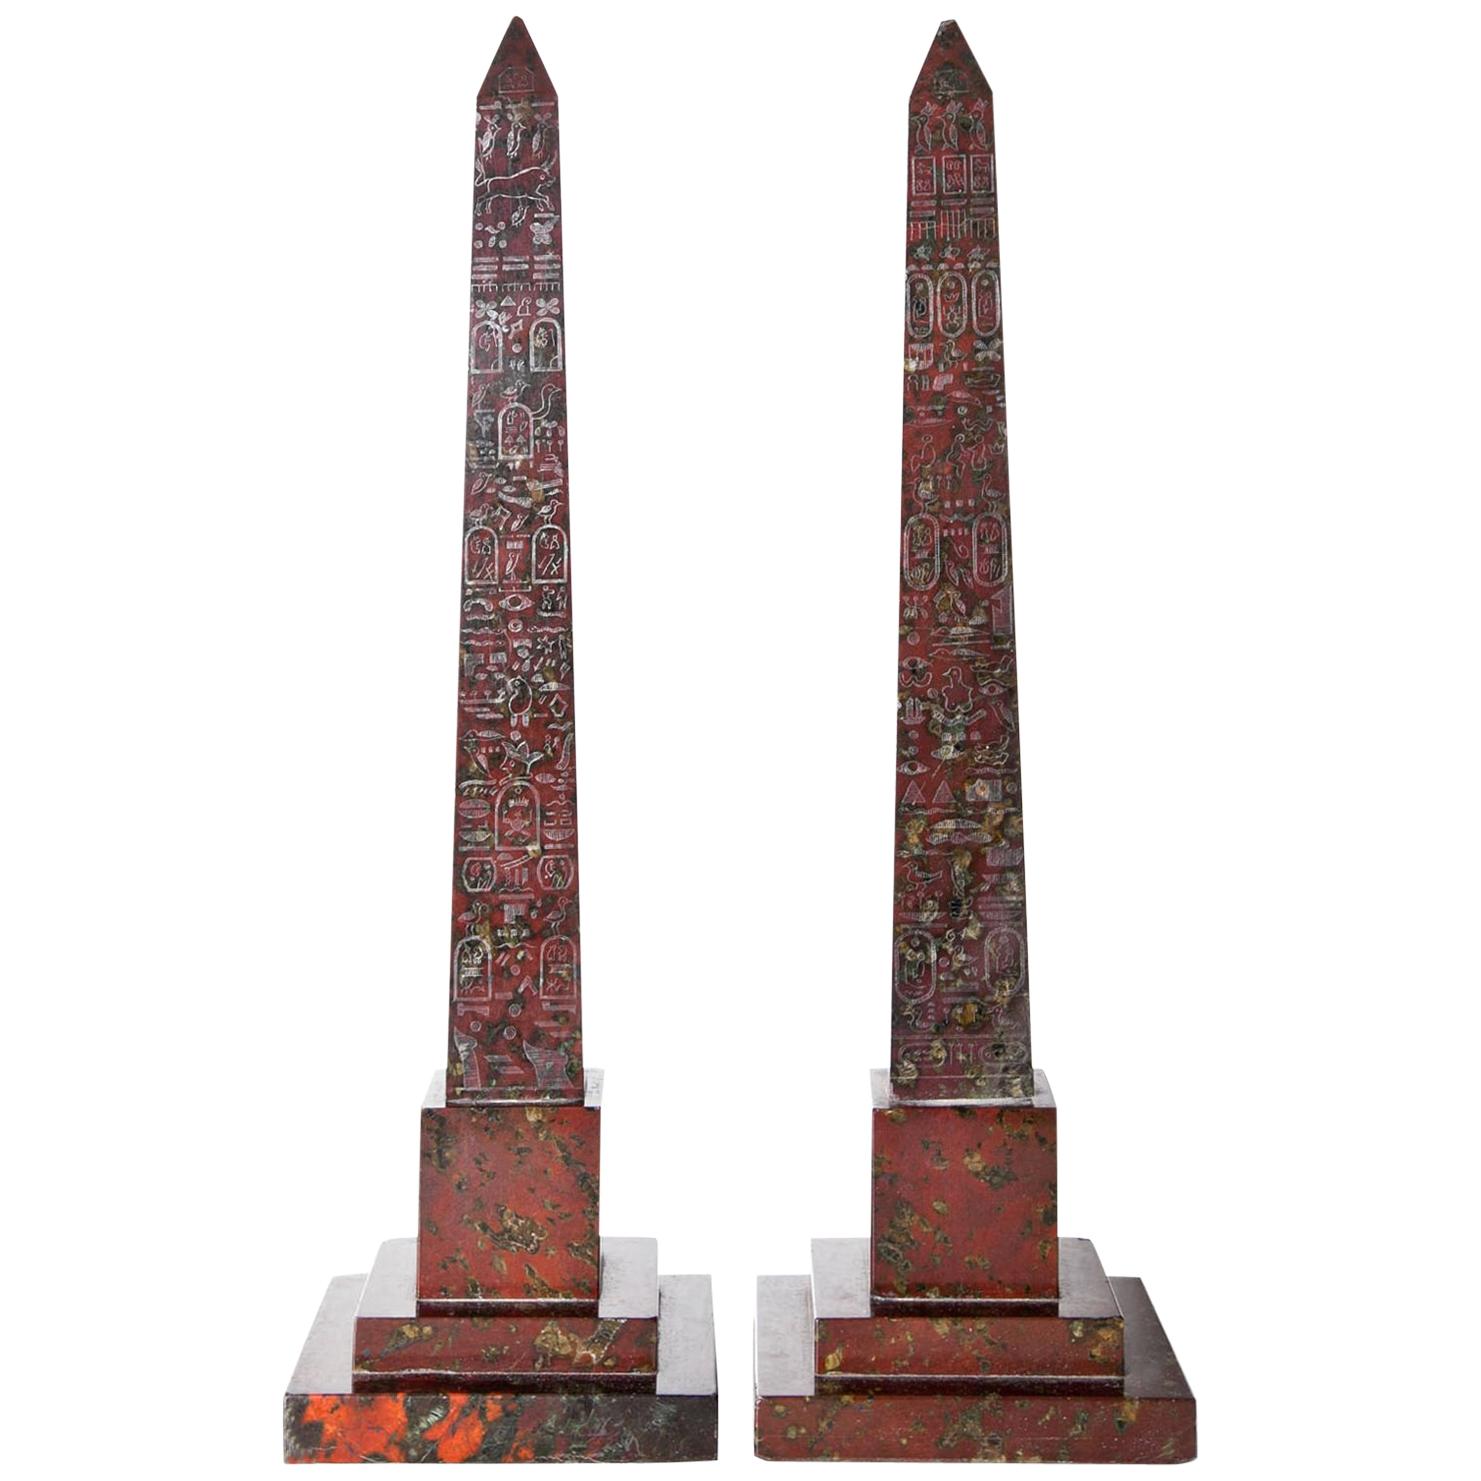 Pair of Obelisks, Red Serpentine, Cornwall England 19th Century